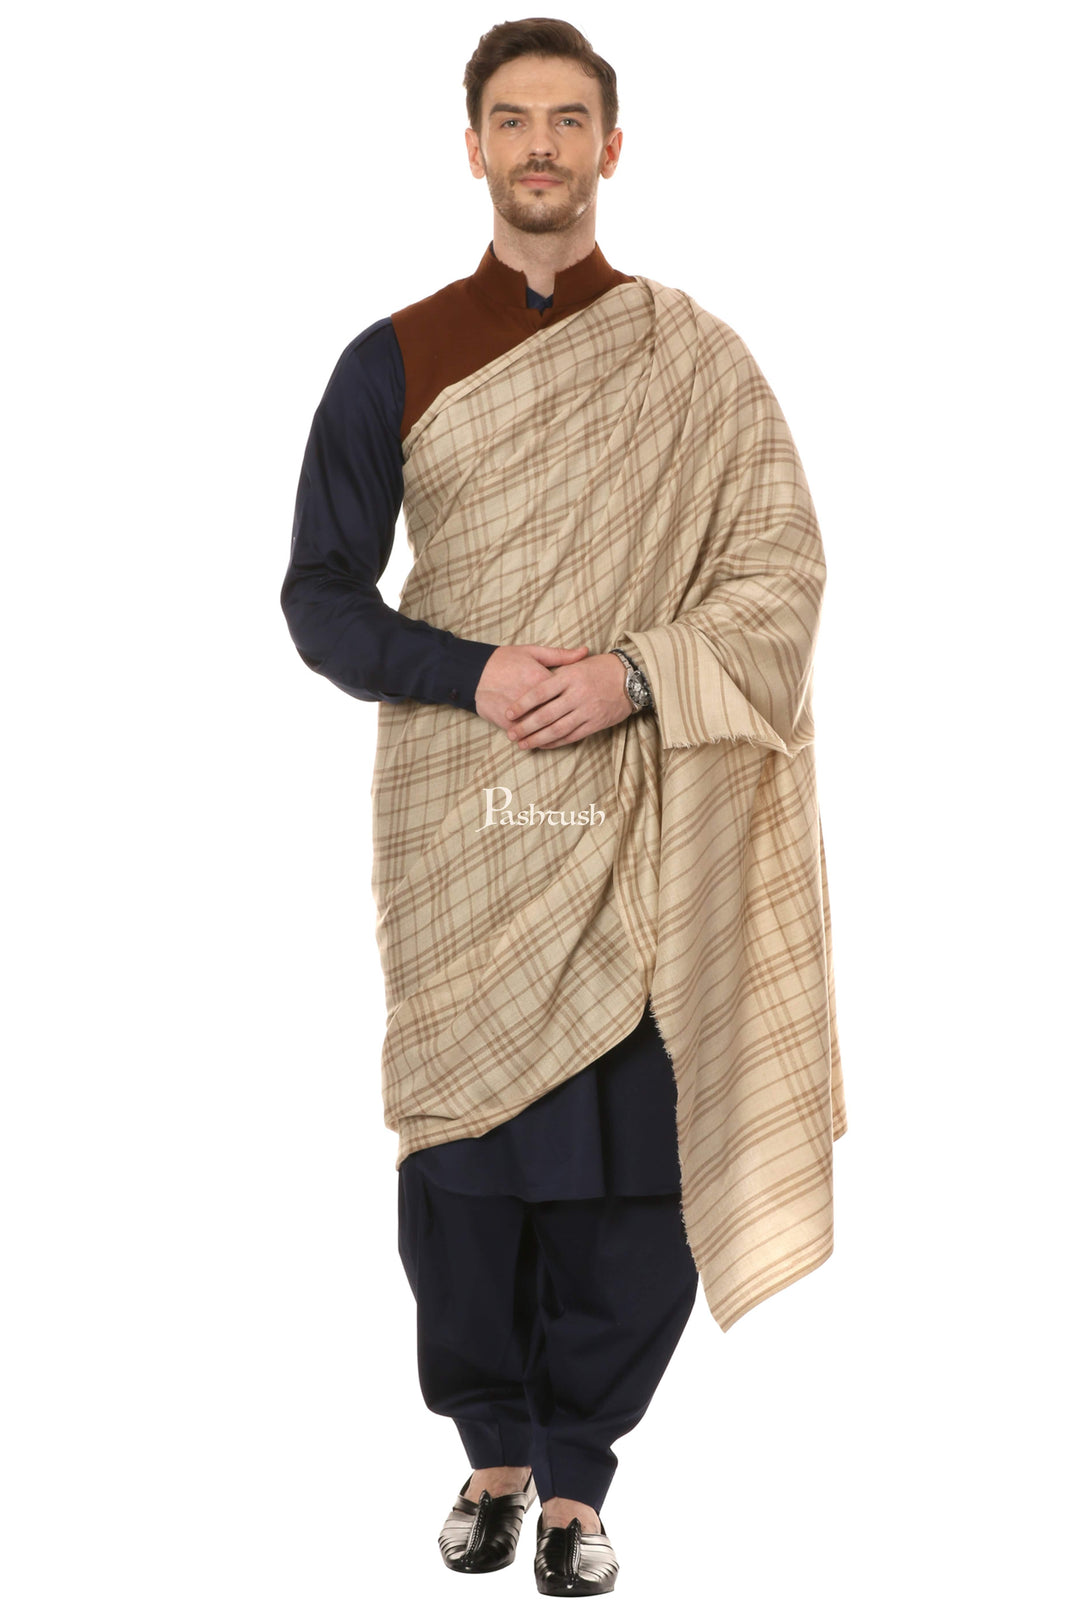 Pashtush India Mens Shawls Gents Shawl Pashtush Mens Woven Check Design Shawl, Merino Wool Light Weight, Soft Hand Feel